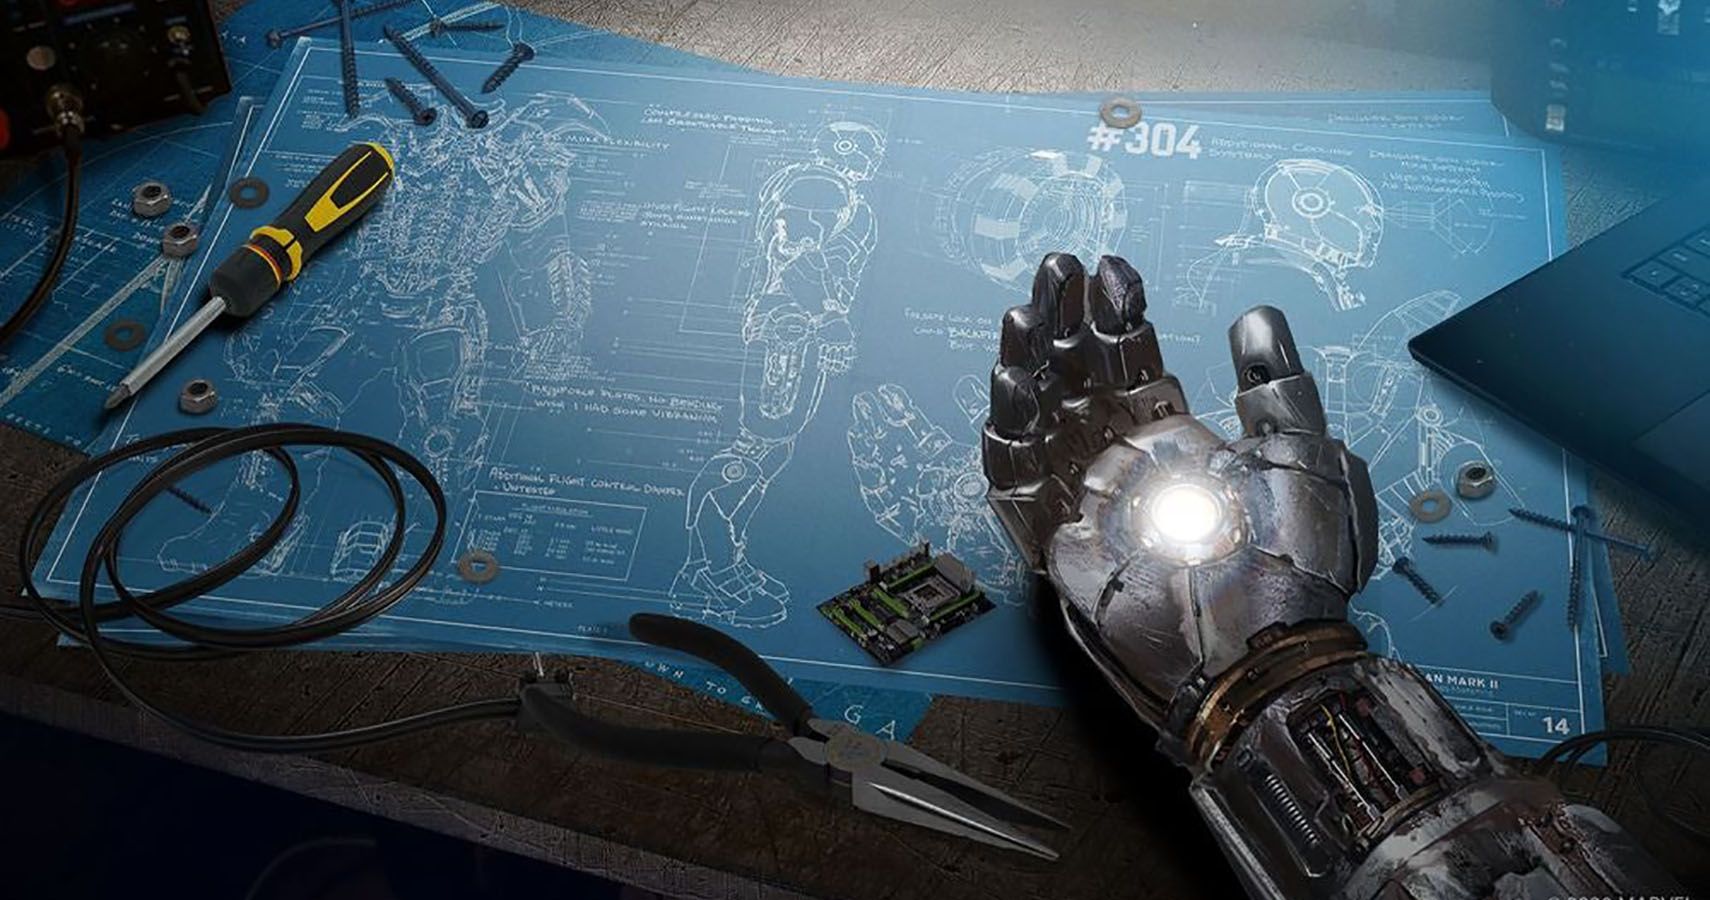 Marvel's Avengers Patch Notes Image for V1.3.0